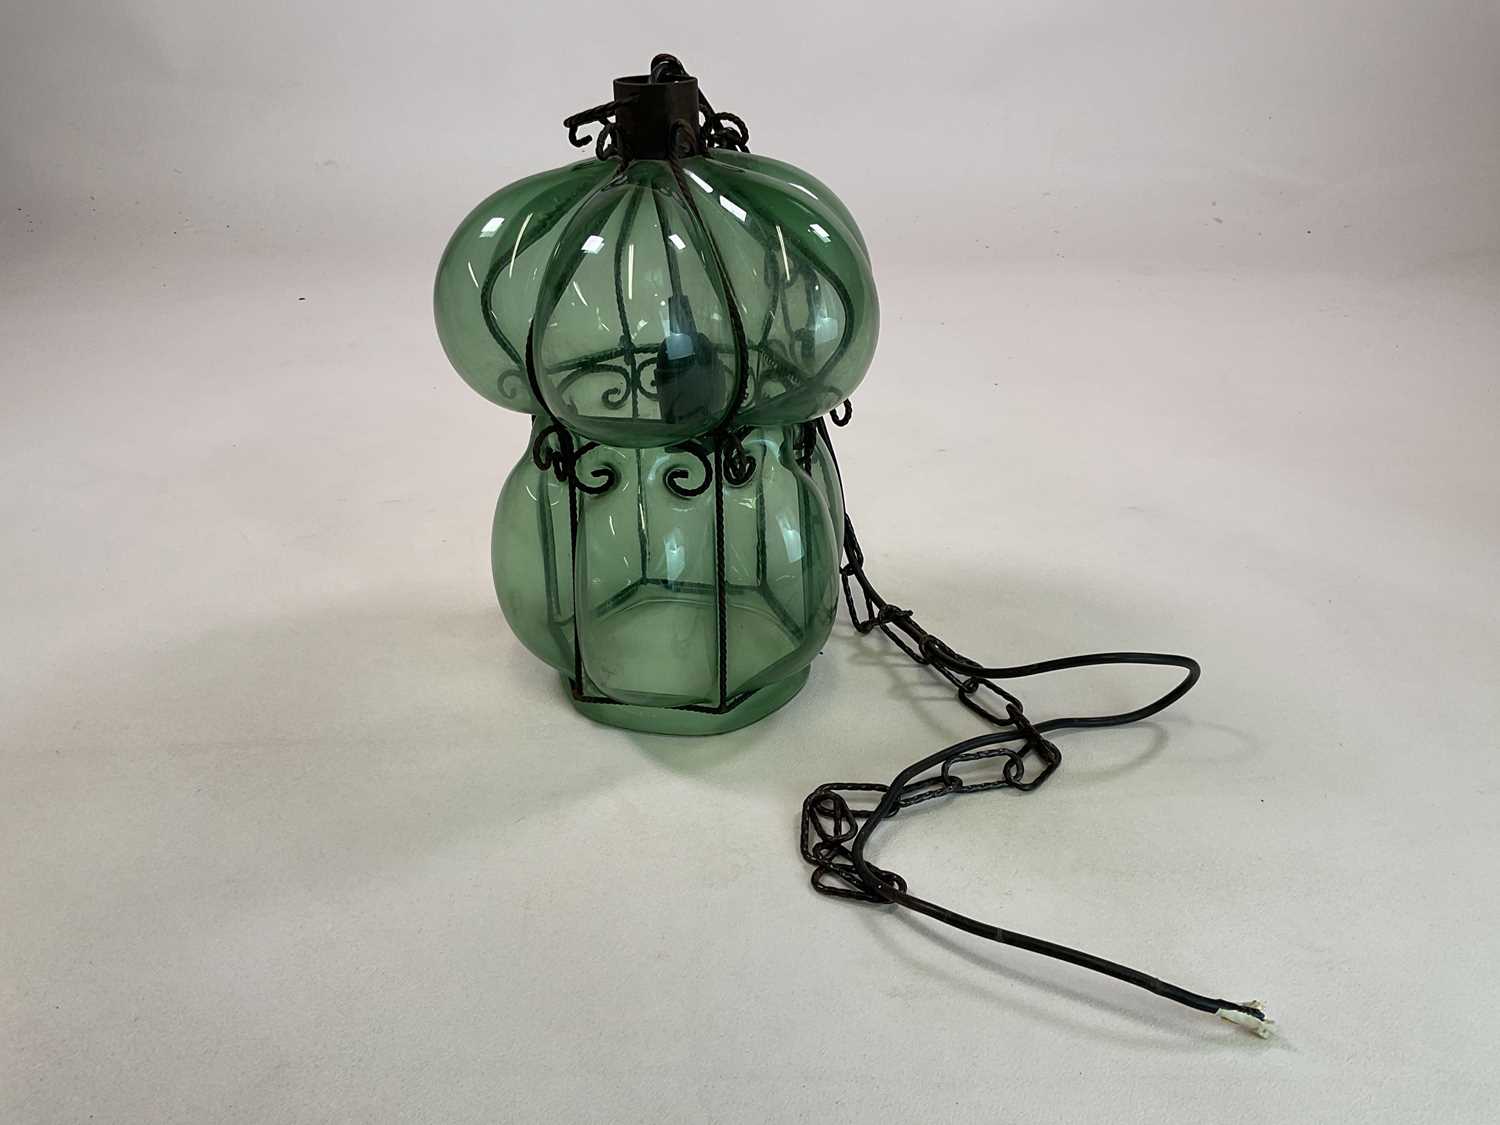 A Venetian glass, hand blown green bubble pendant light with metal framework. H: 34cm - Image 3 of 3